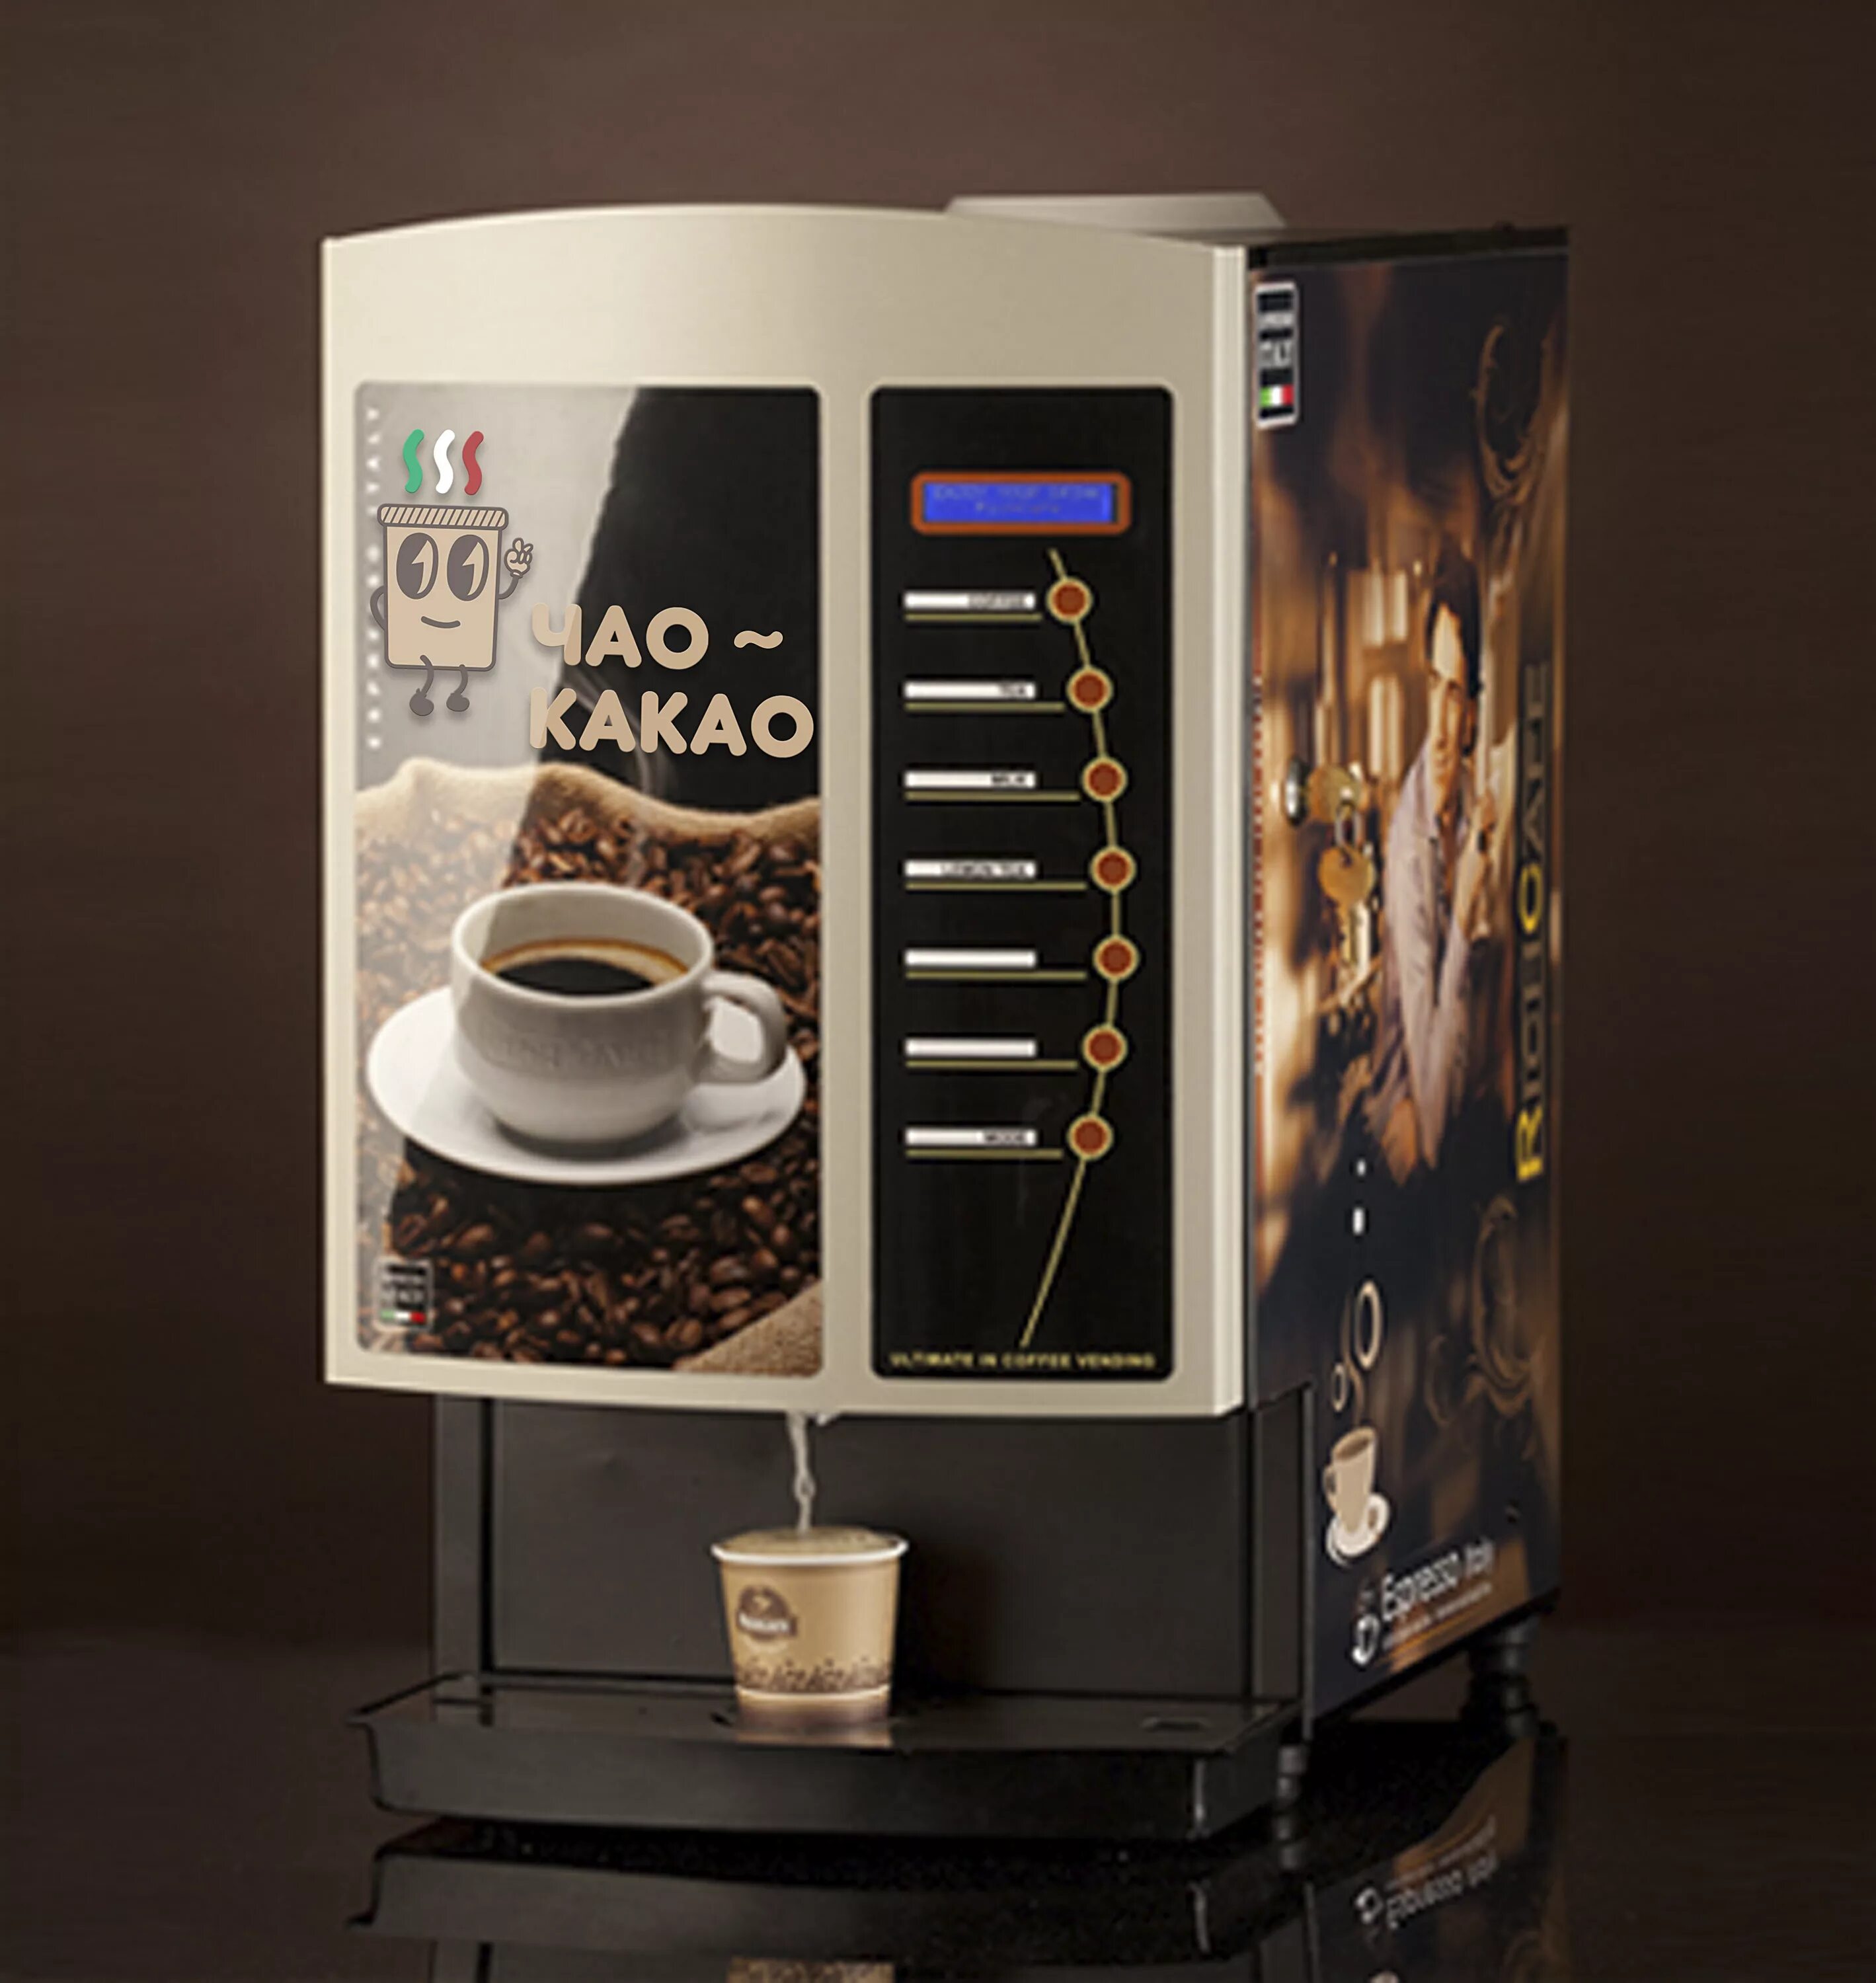 Вендинговый аппарат кофе Nespresso. Vending кофе Machine. Кофеаппарат 307b-1. Горячий шоколад мини вендинг автомат. Кофейный аппарат кофе